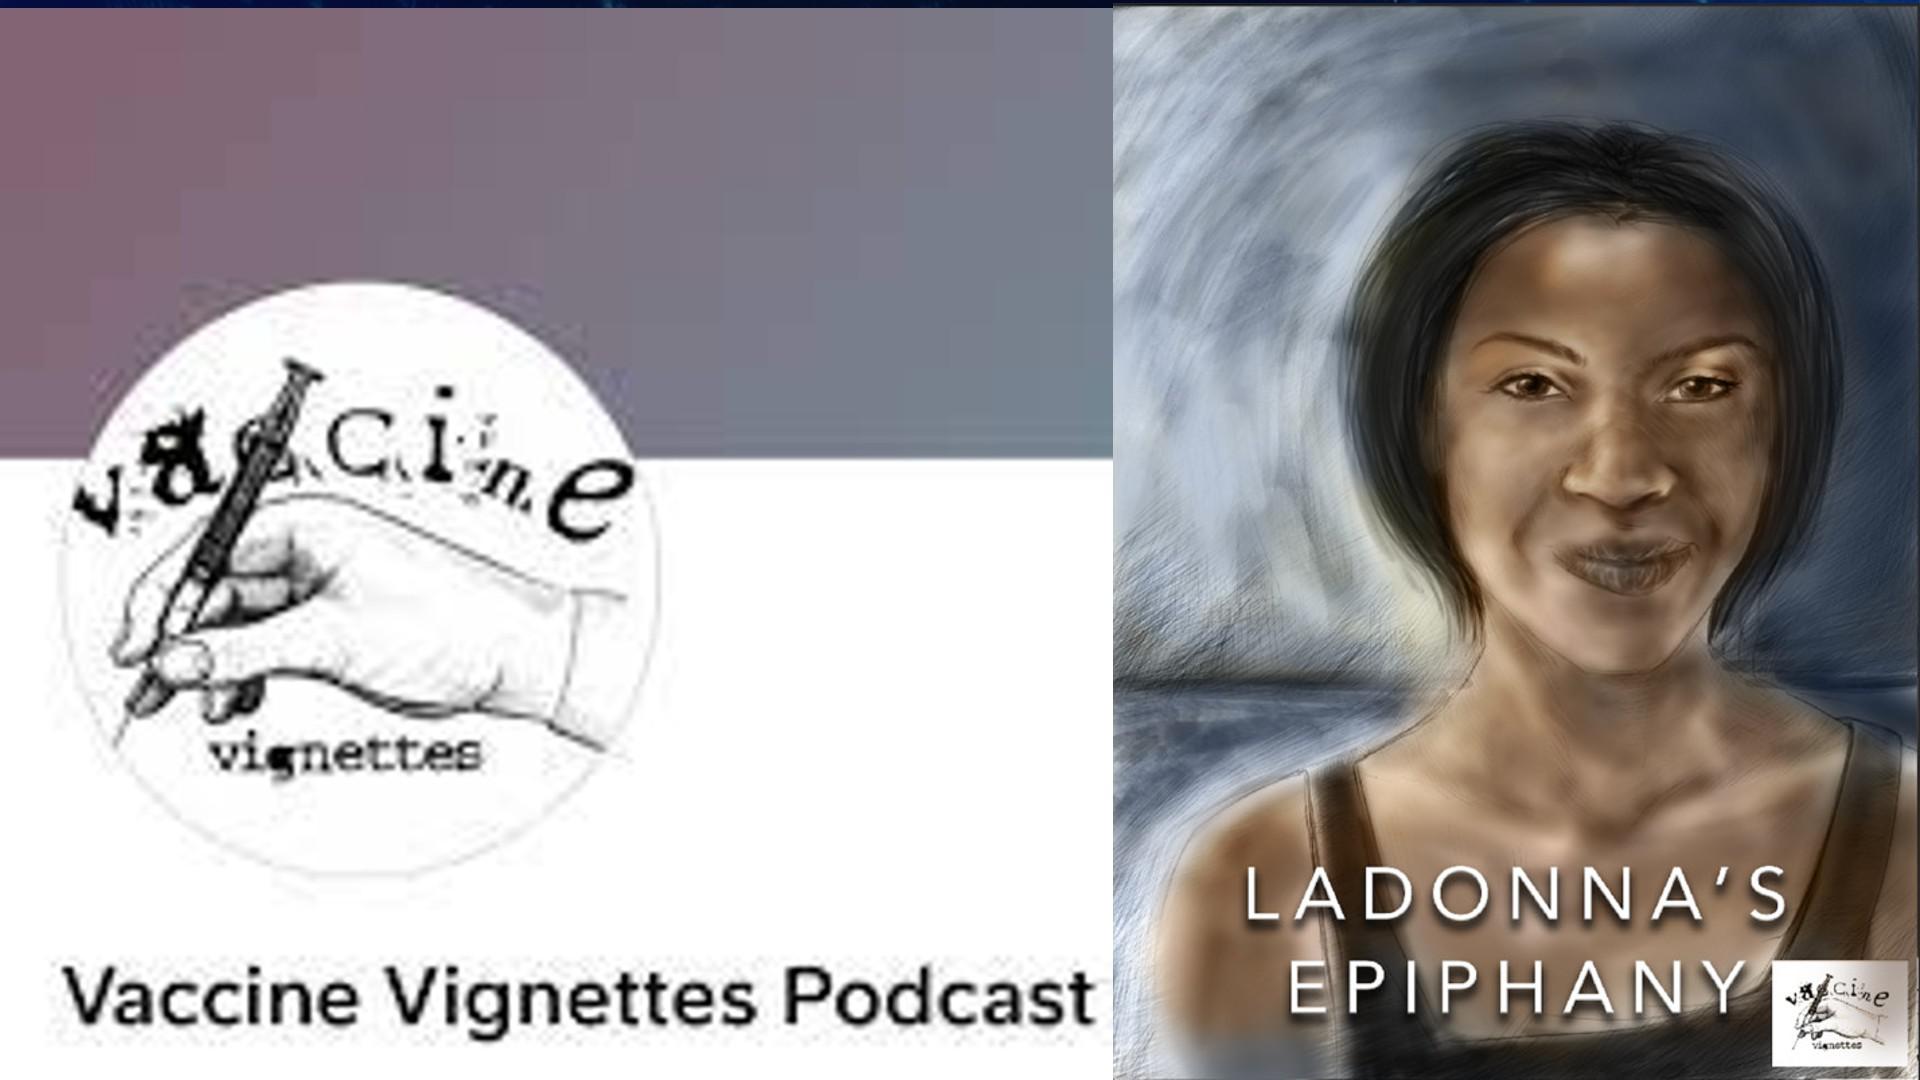 Vaccine Vignettes Podcast - Ep. 1: LaDonna's Epiphany